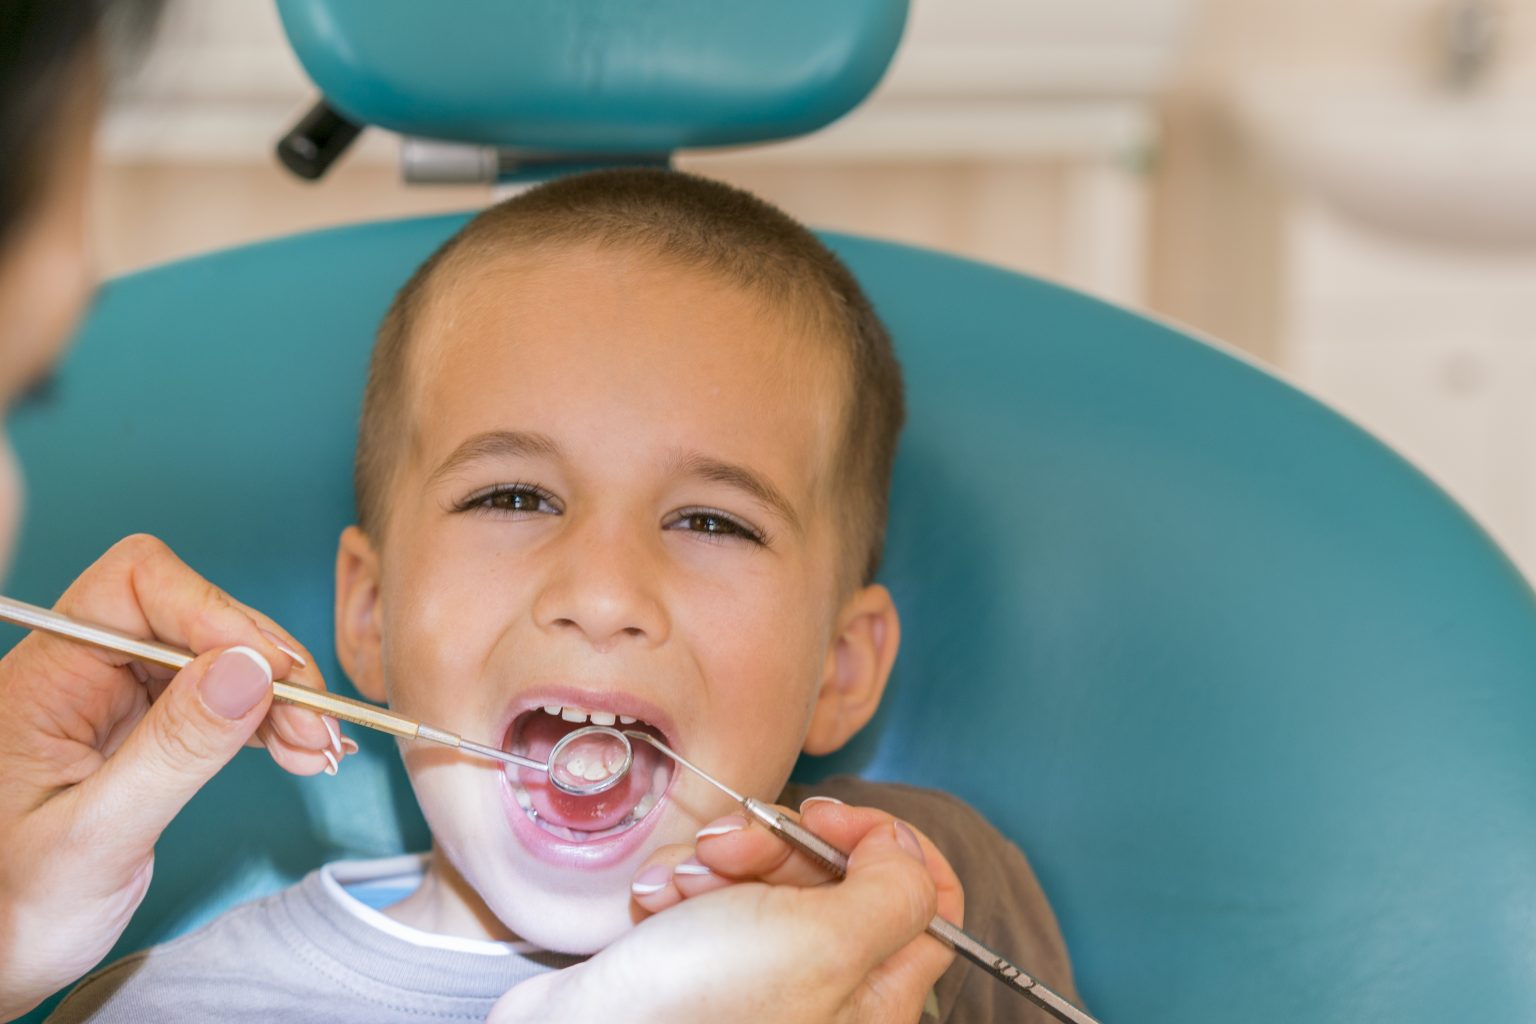 Pediatric Dentist Examining A Little Boys Teeth In The Dentists Chair At The Dental Clinic. Dentist Examining Little Boy's Teeth In Clinic